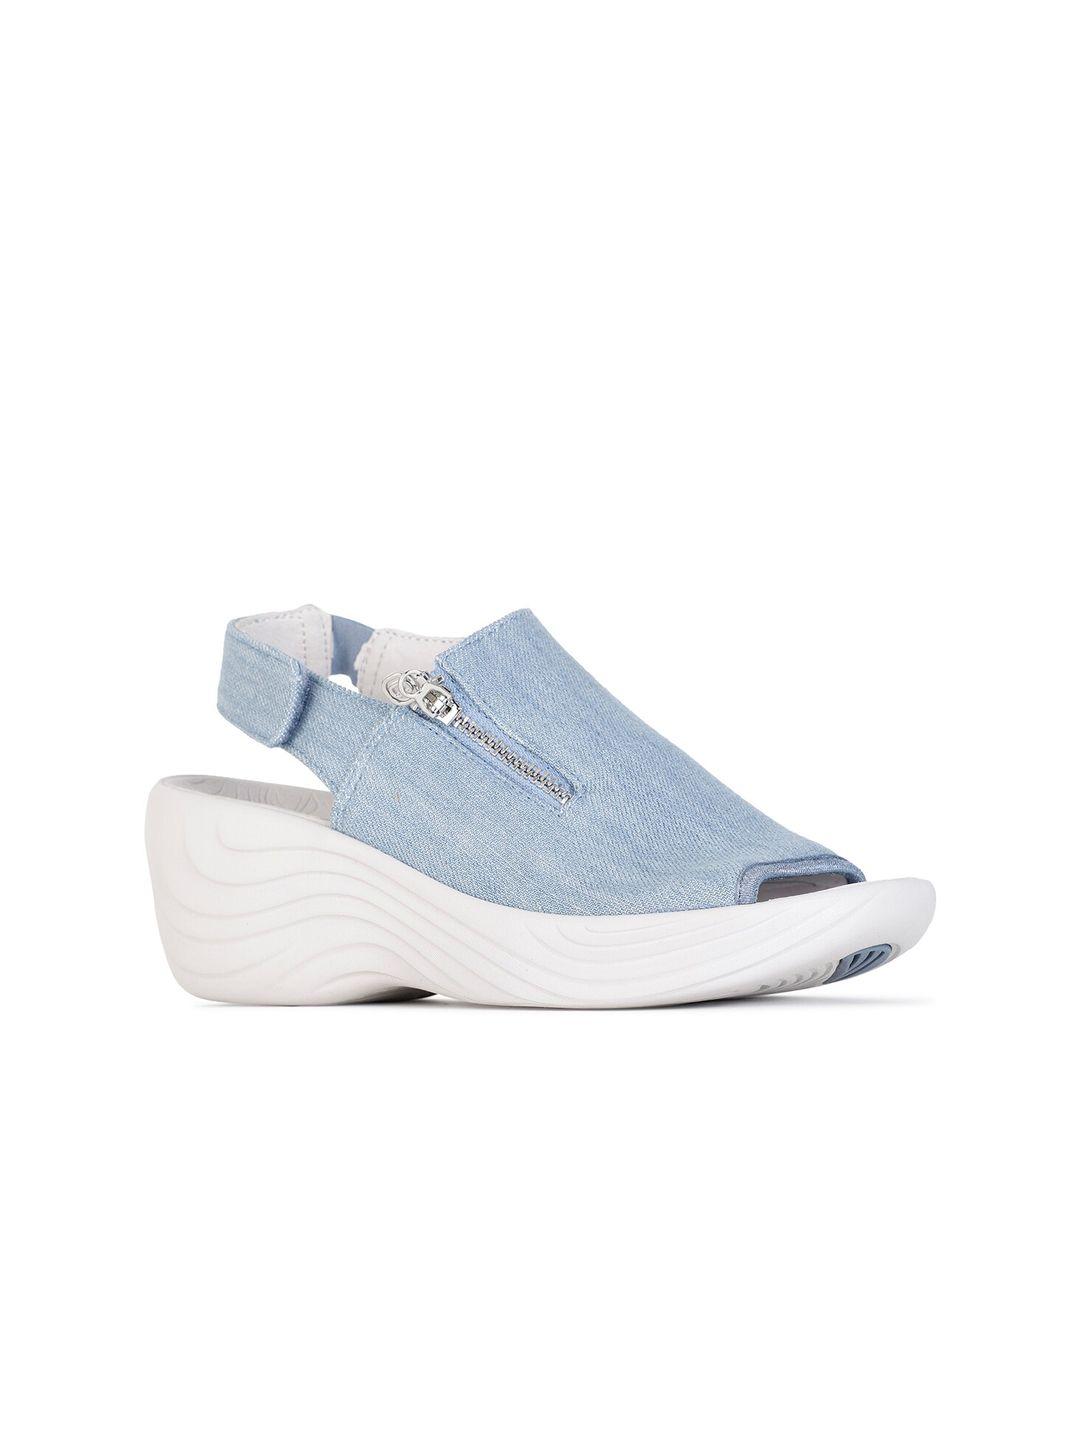 naturalizer women blue & white pu wedge peep toes heels